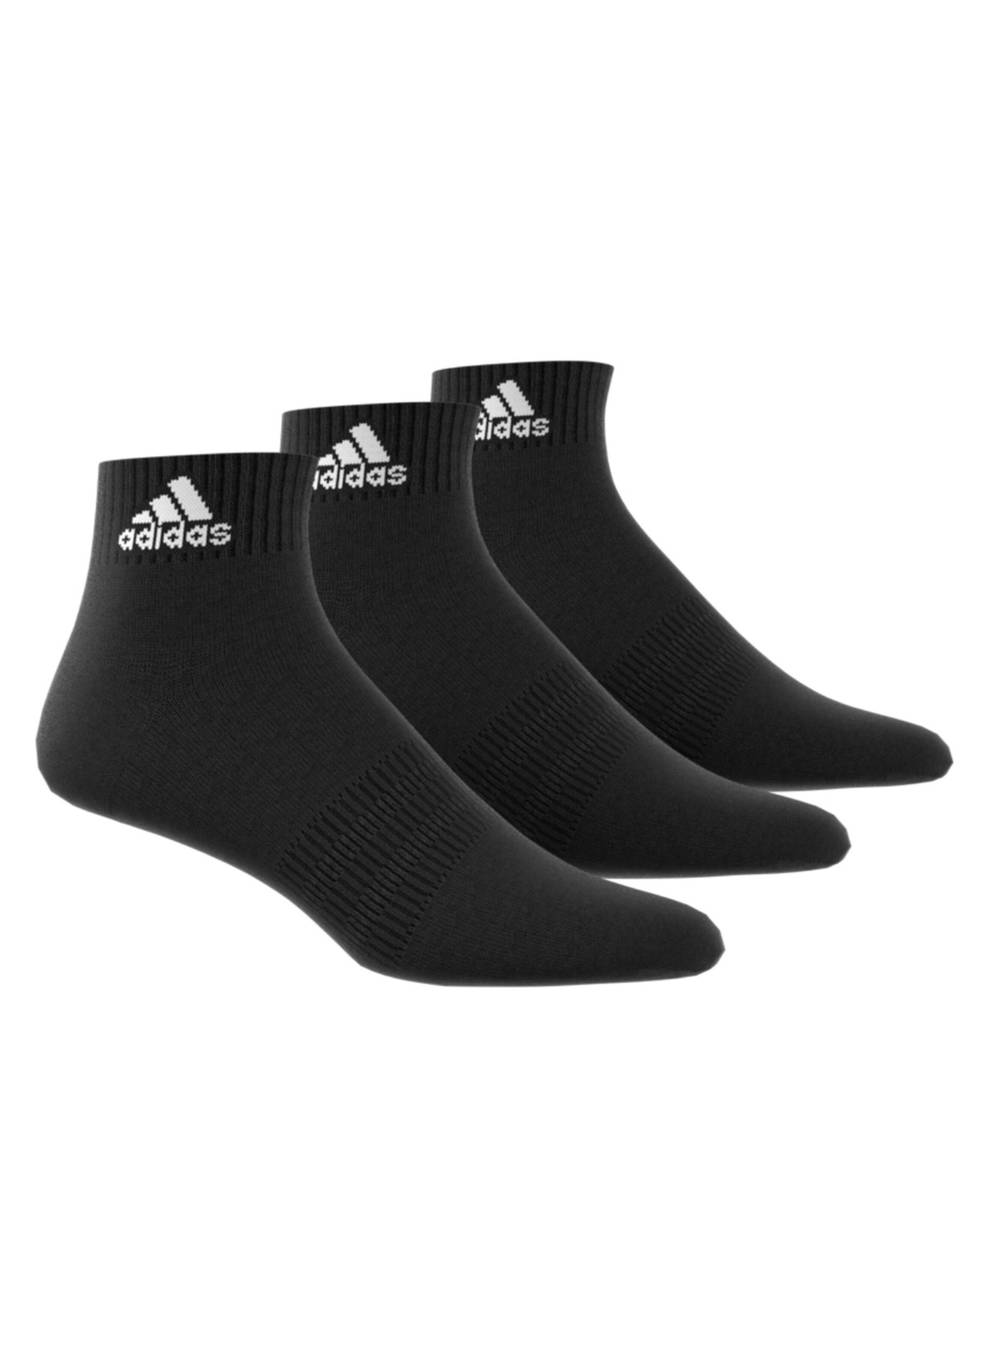 Adidas pack 3 calcetín urbana style (color: negro. talla: s)